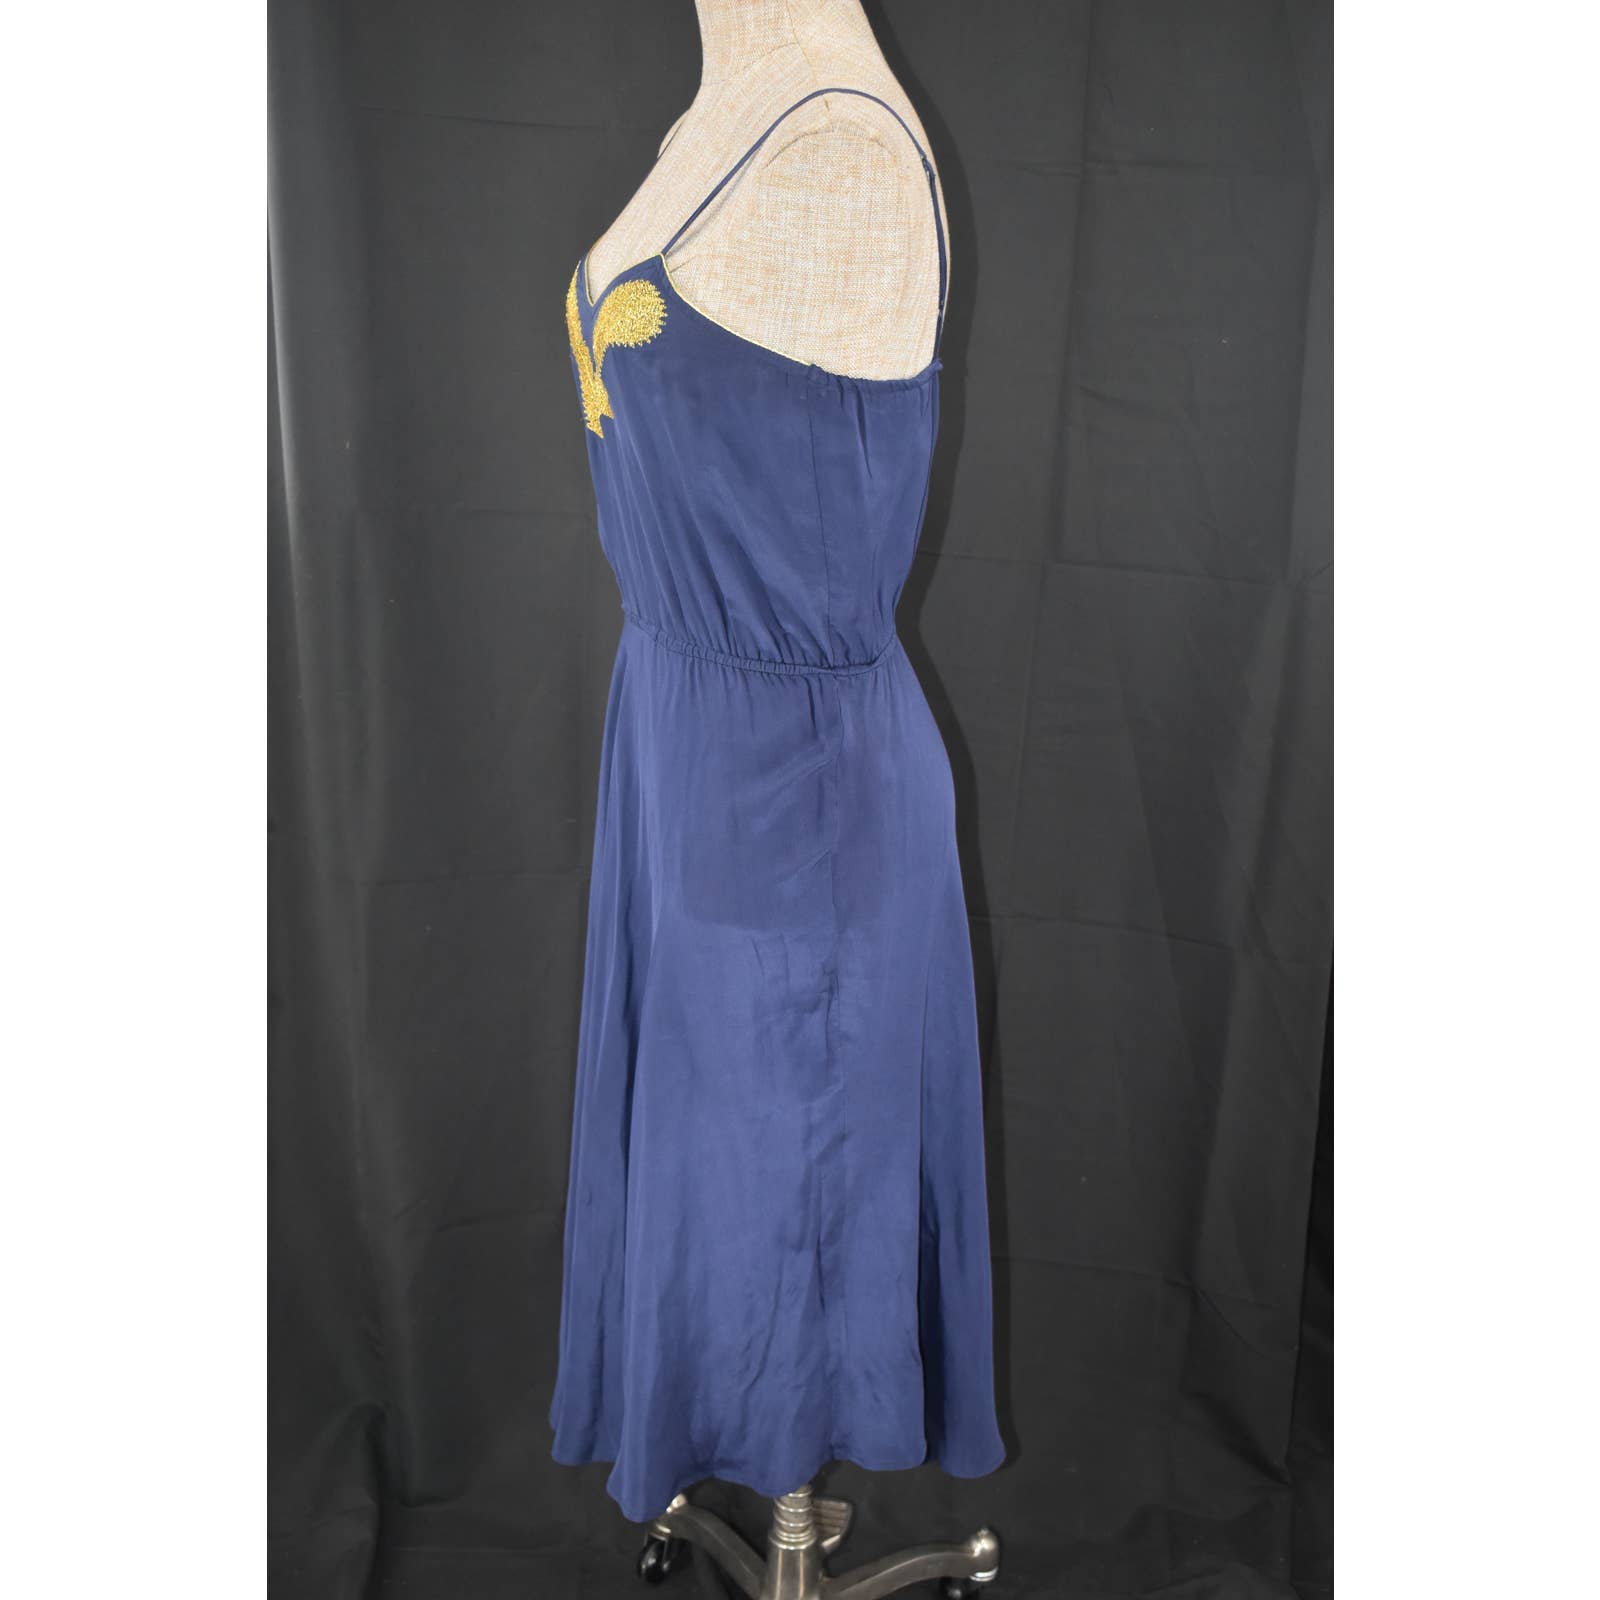 Barney's Co Op Beyond Vintage Blue Gold Metallic Dress - S